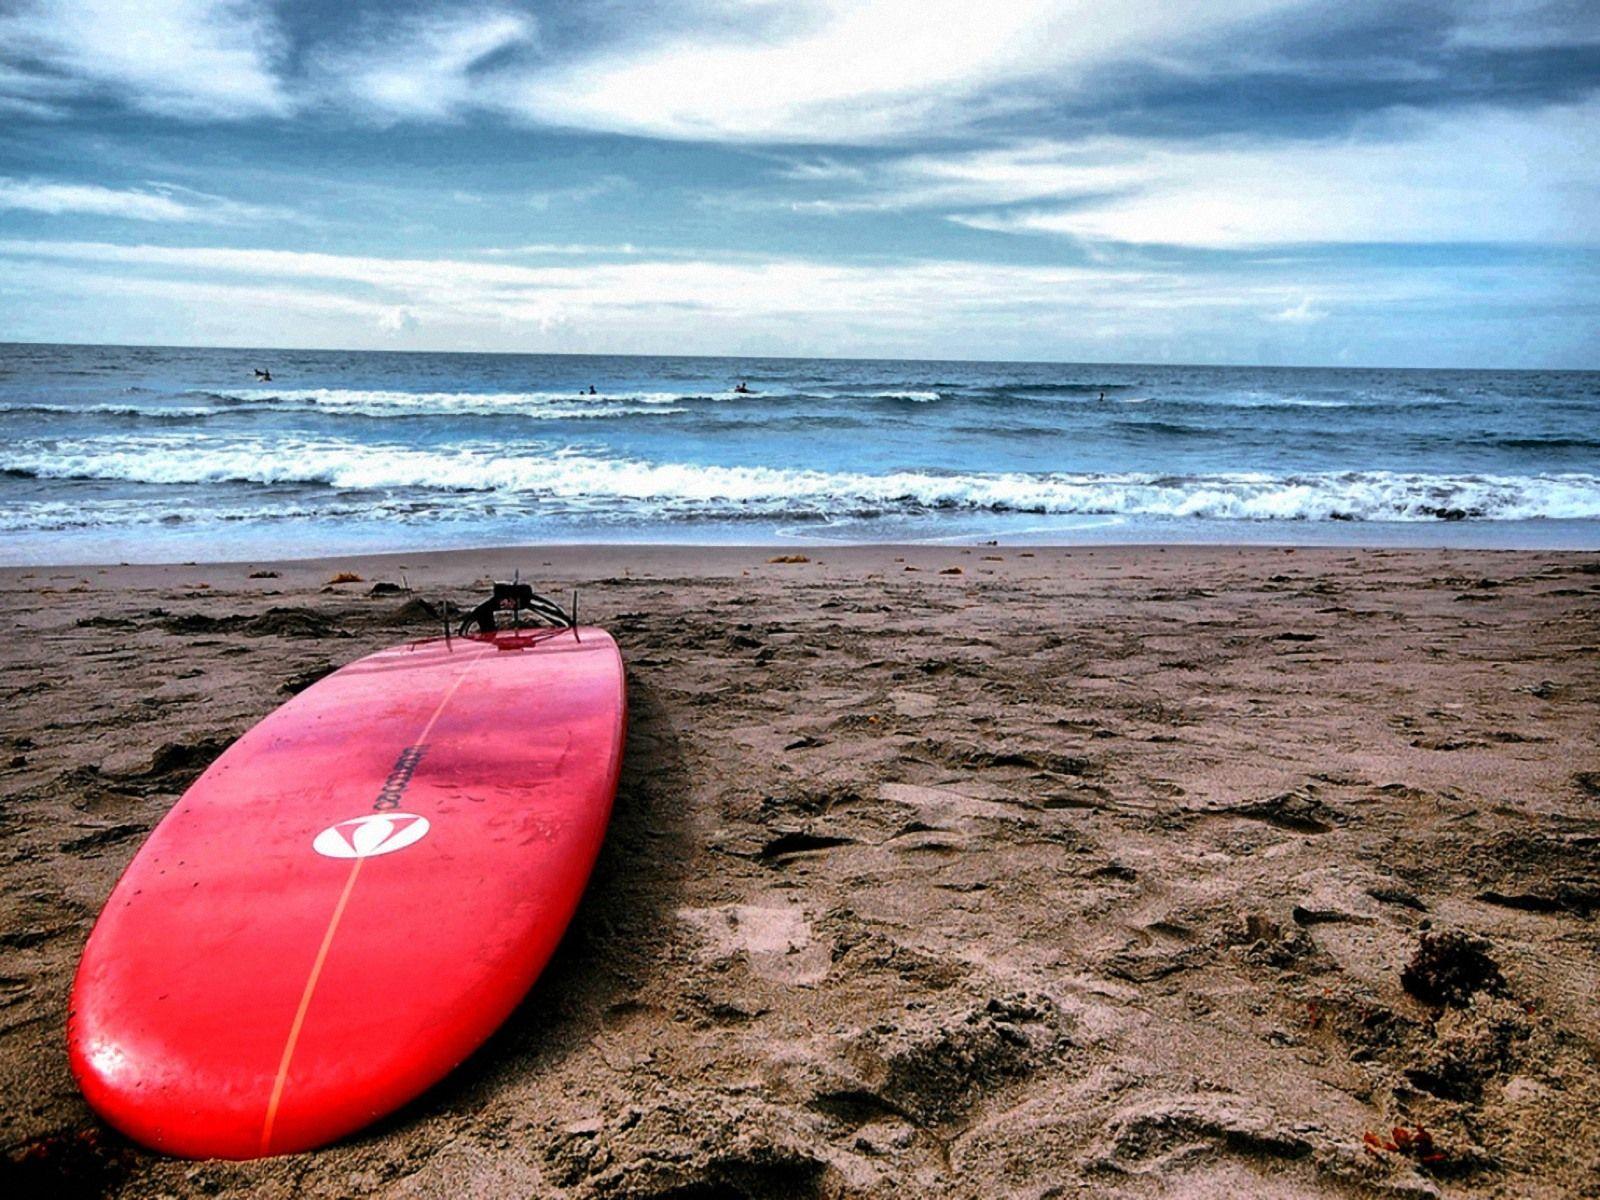 Surf Beach Image Free Download